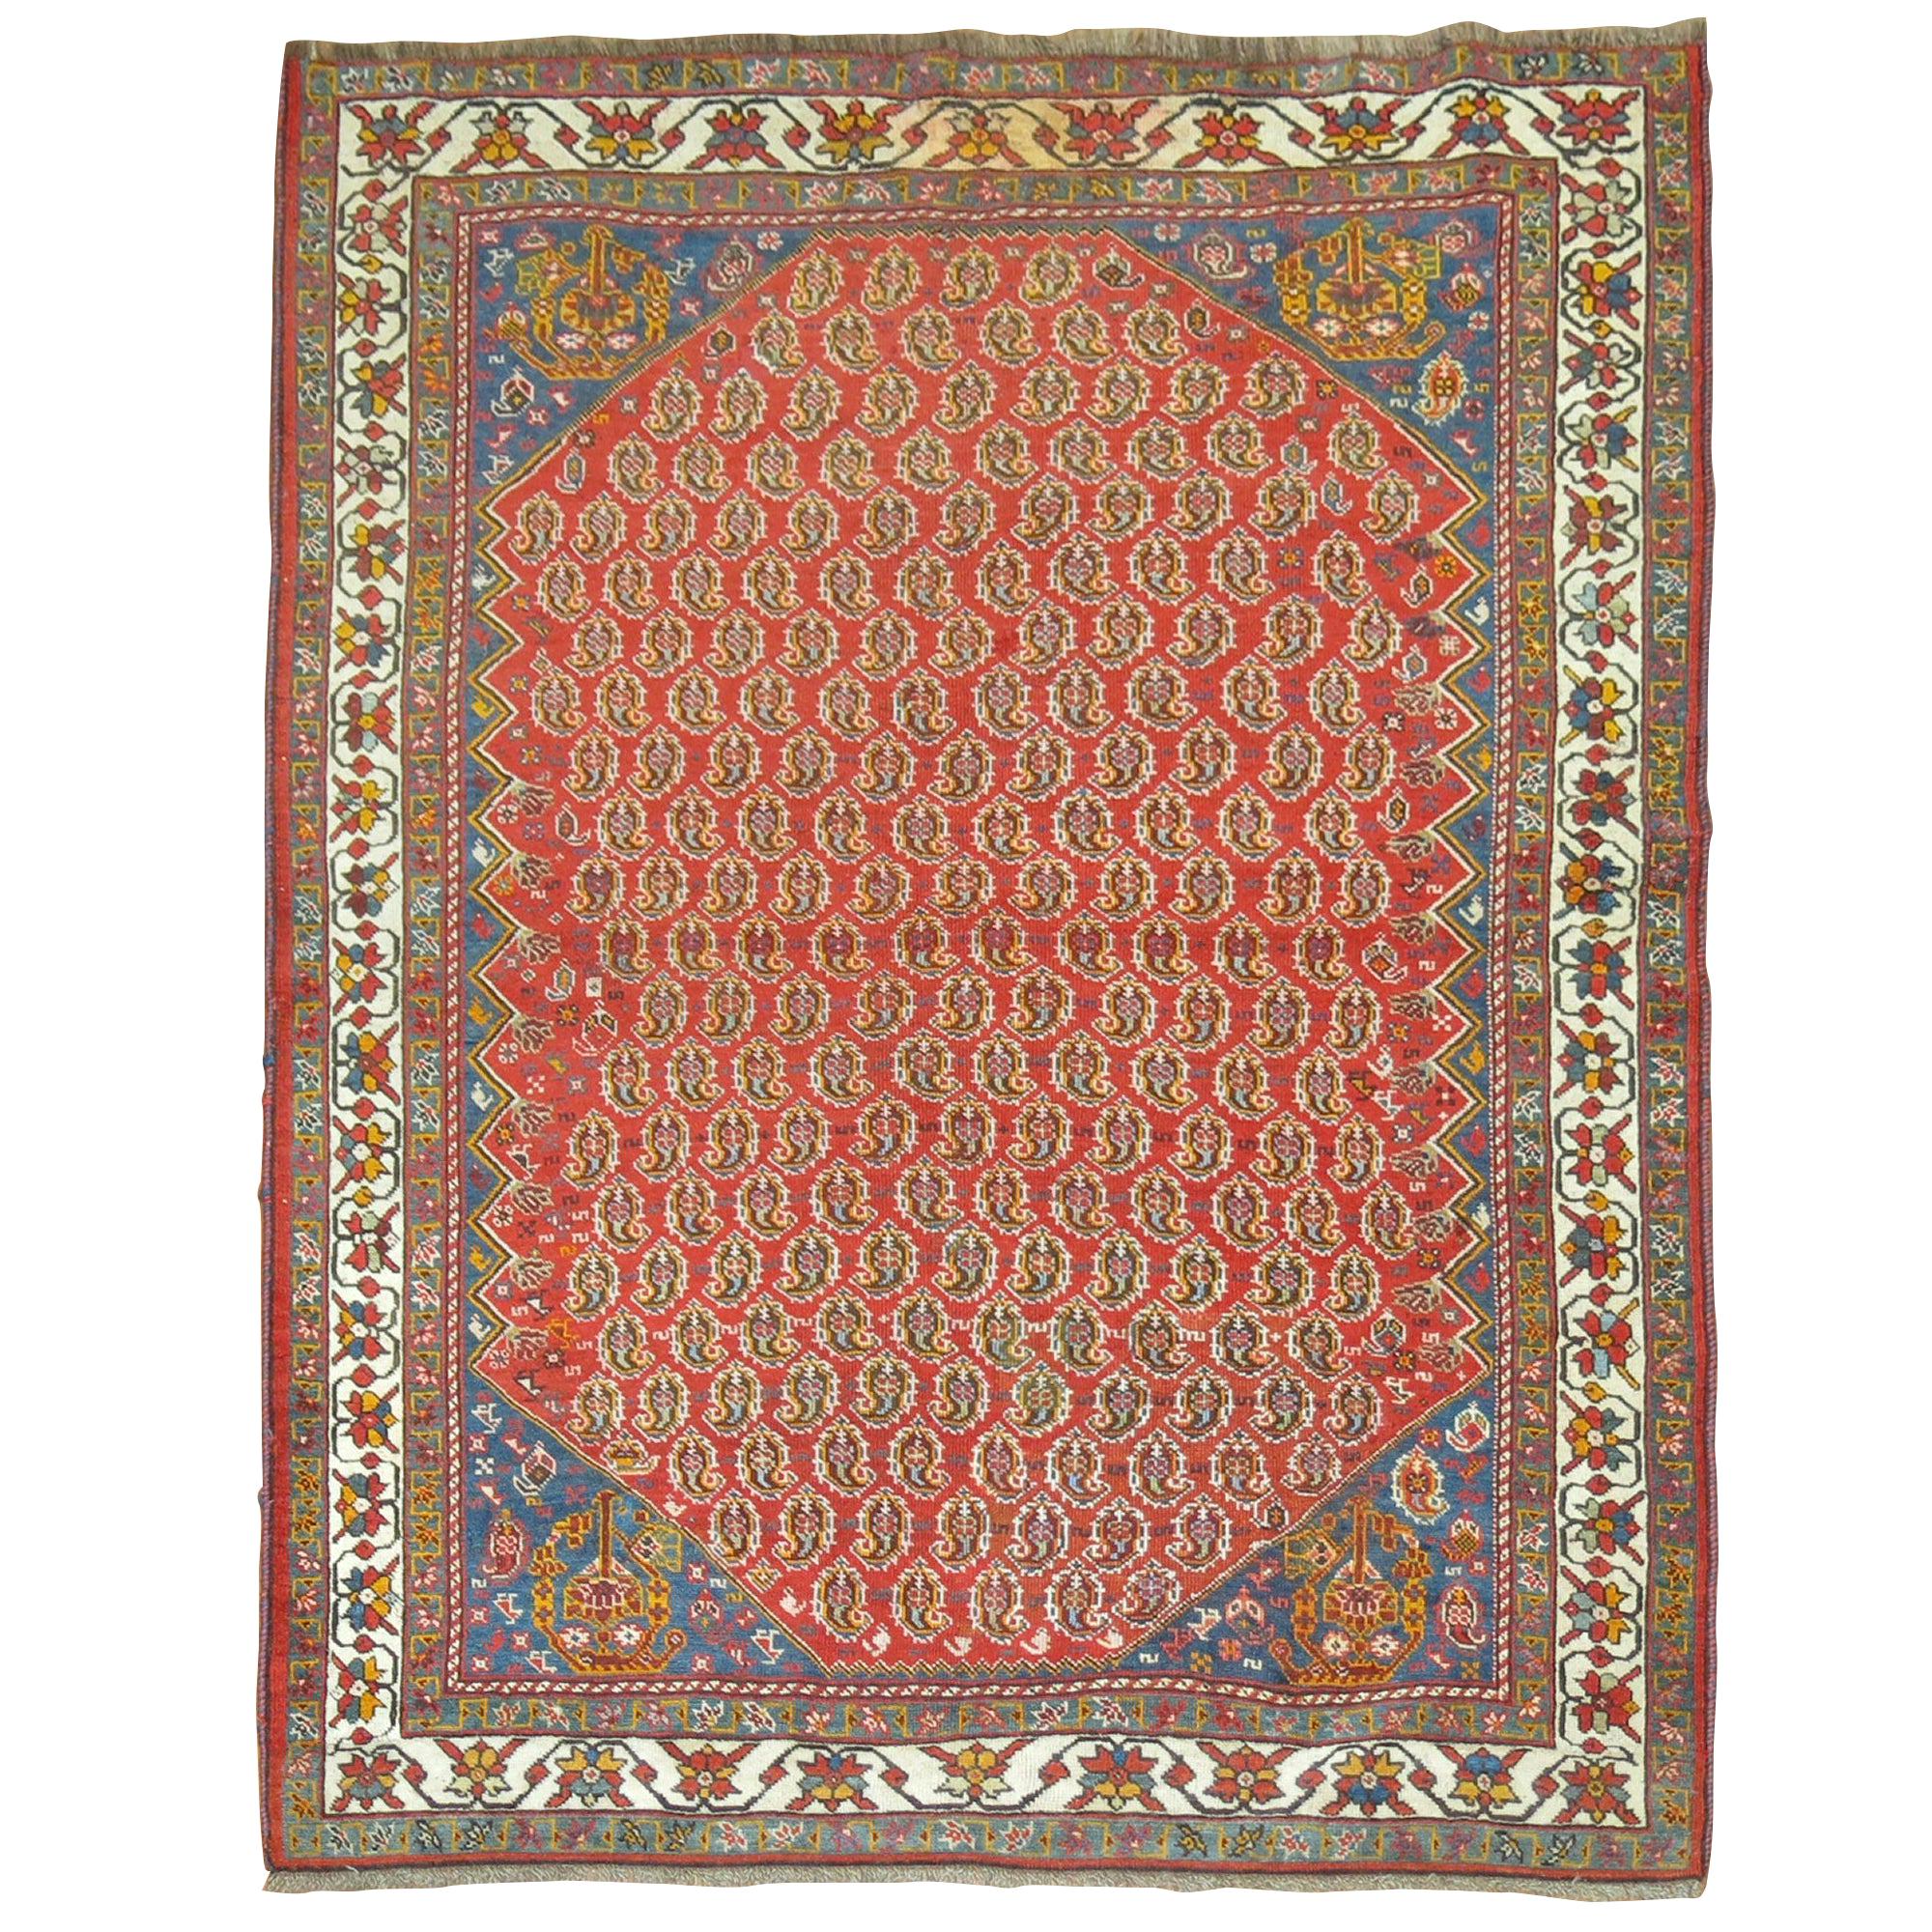 Antique Tribal Persian Rug, Red Ground, Blue Corner, Ivory Border For Sale